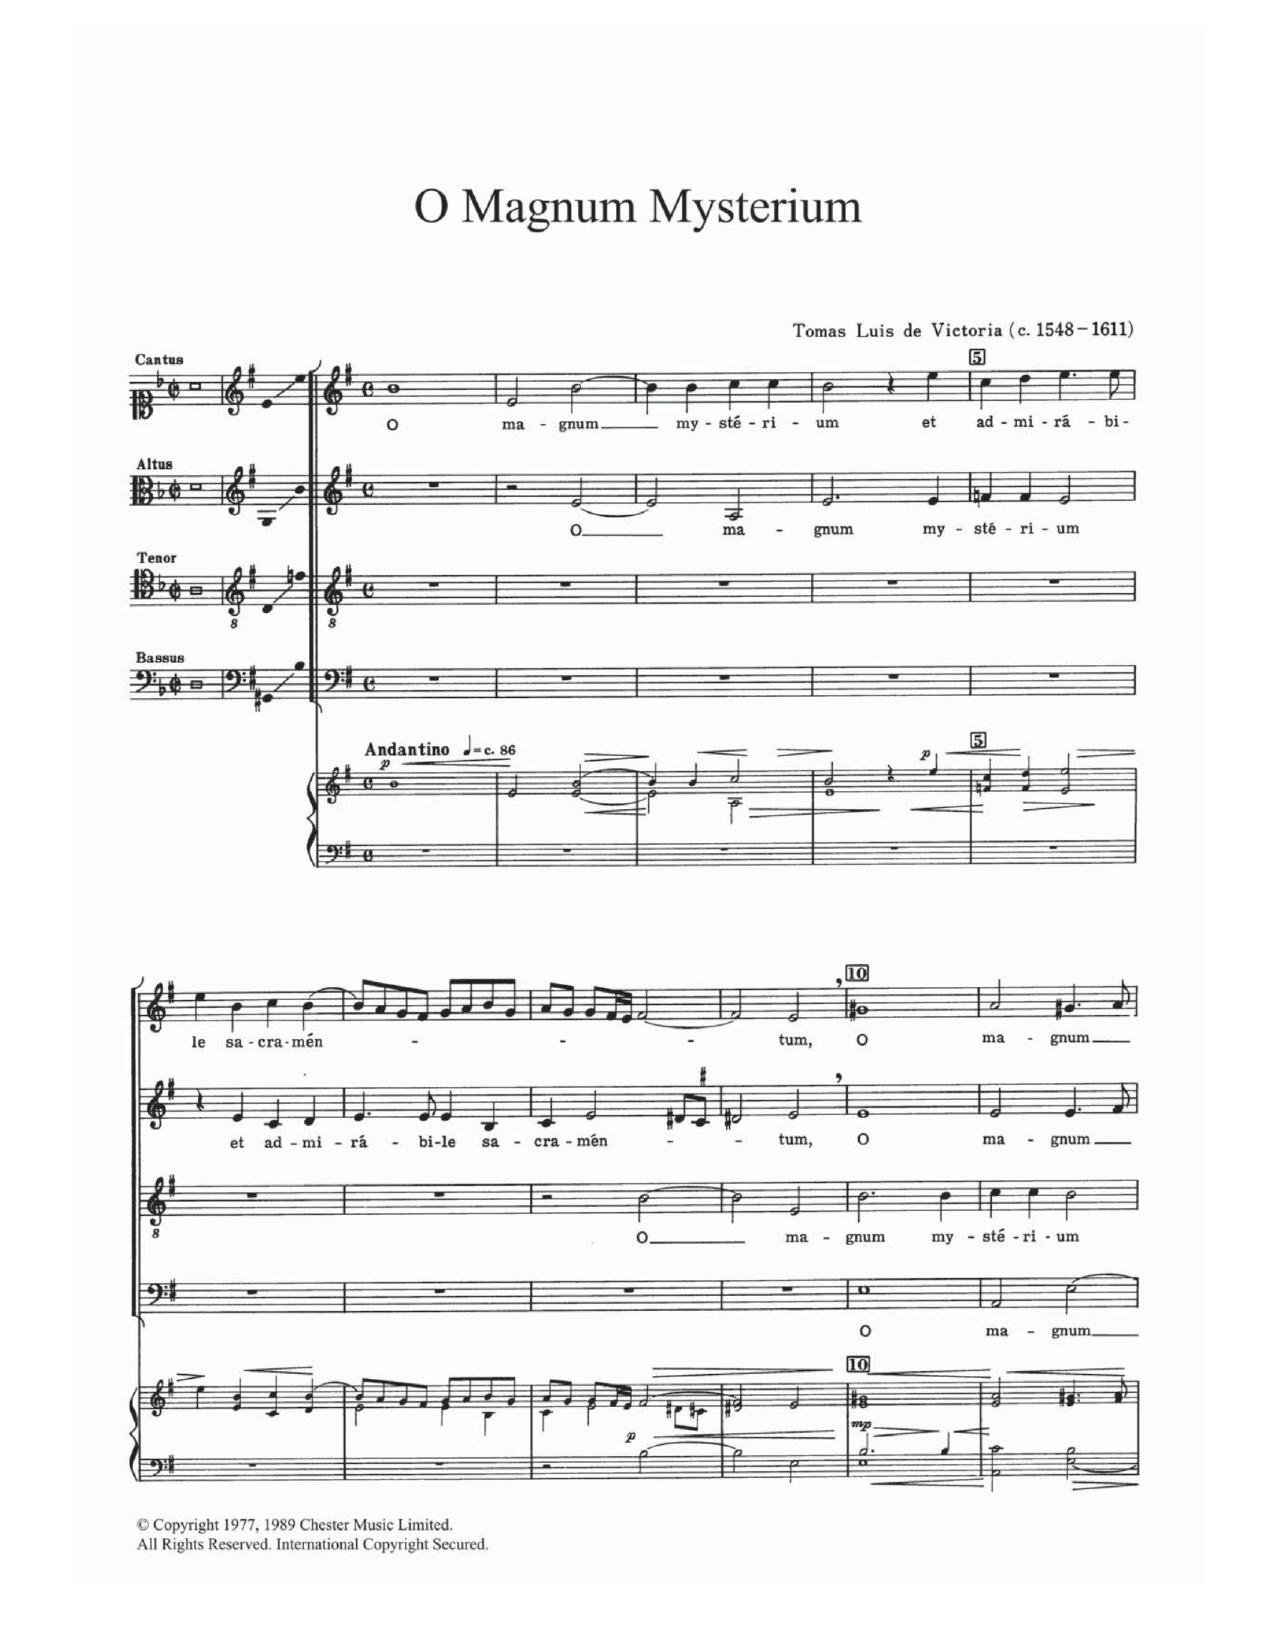 Tomas Luis de Victoria O Magnum Mysterium sheet music notes and chords arranged for Choir